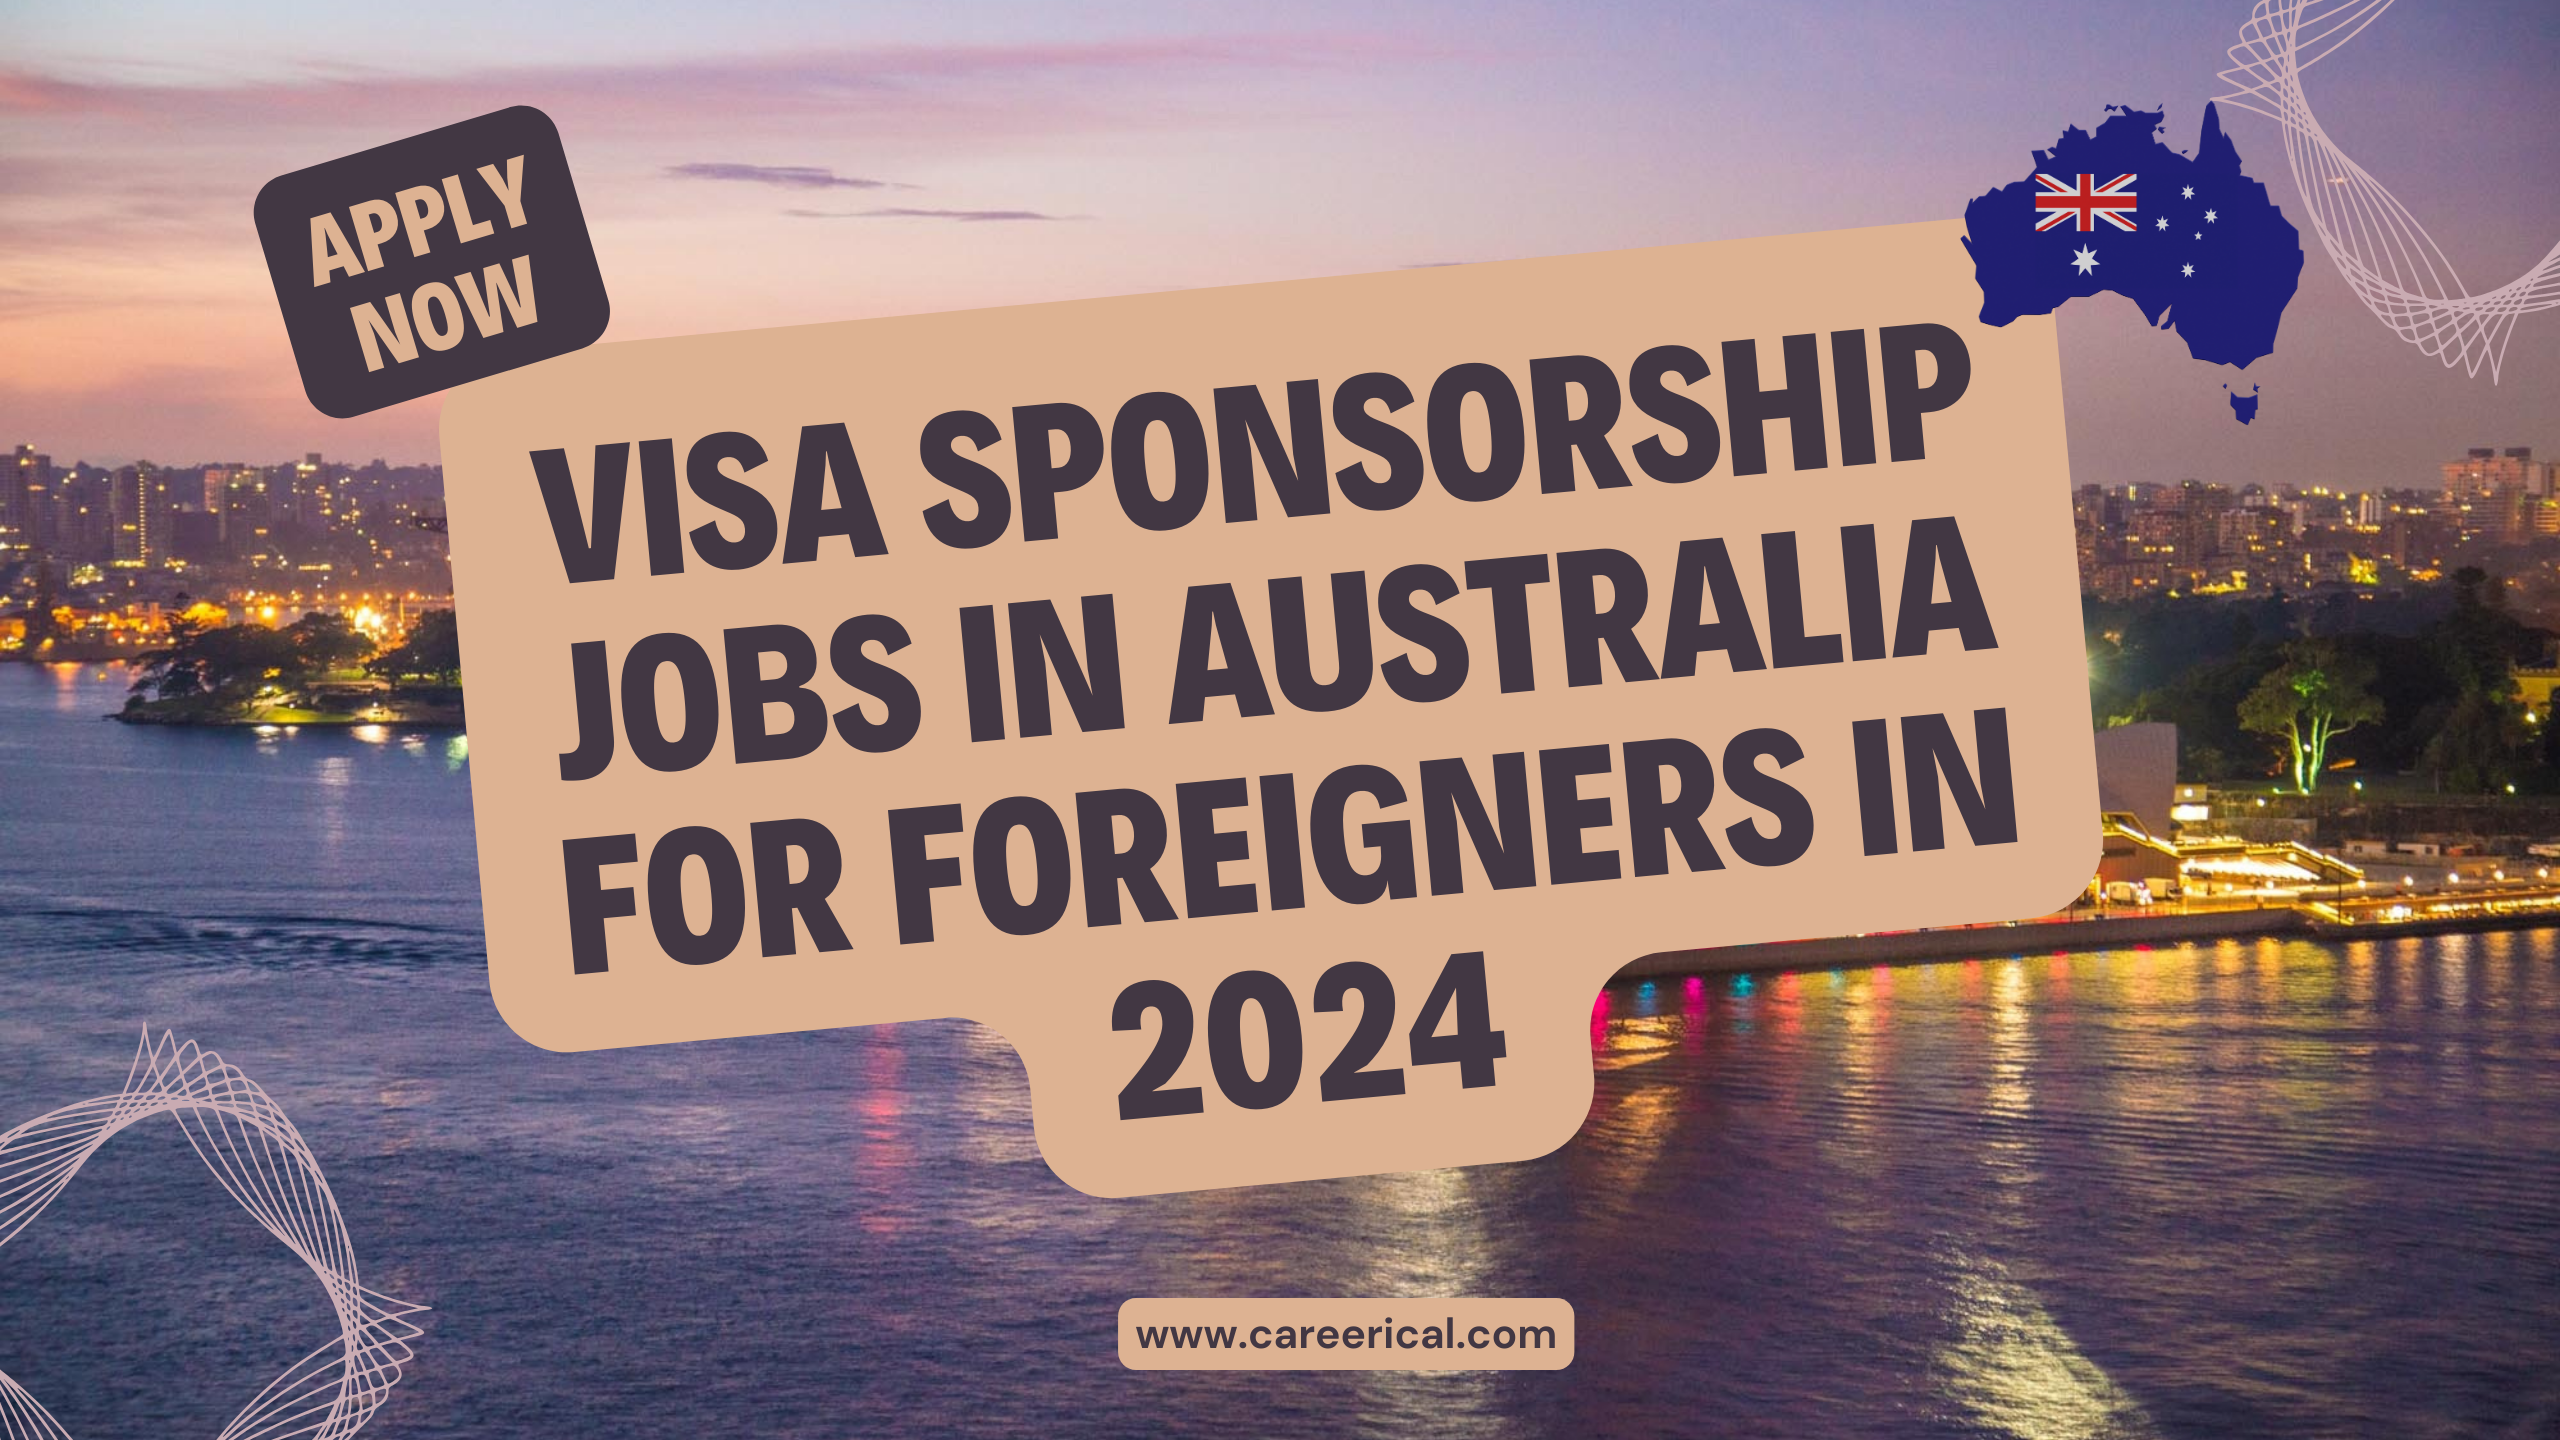 Visa Sponsorship Jobs - Australia 2024